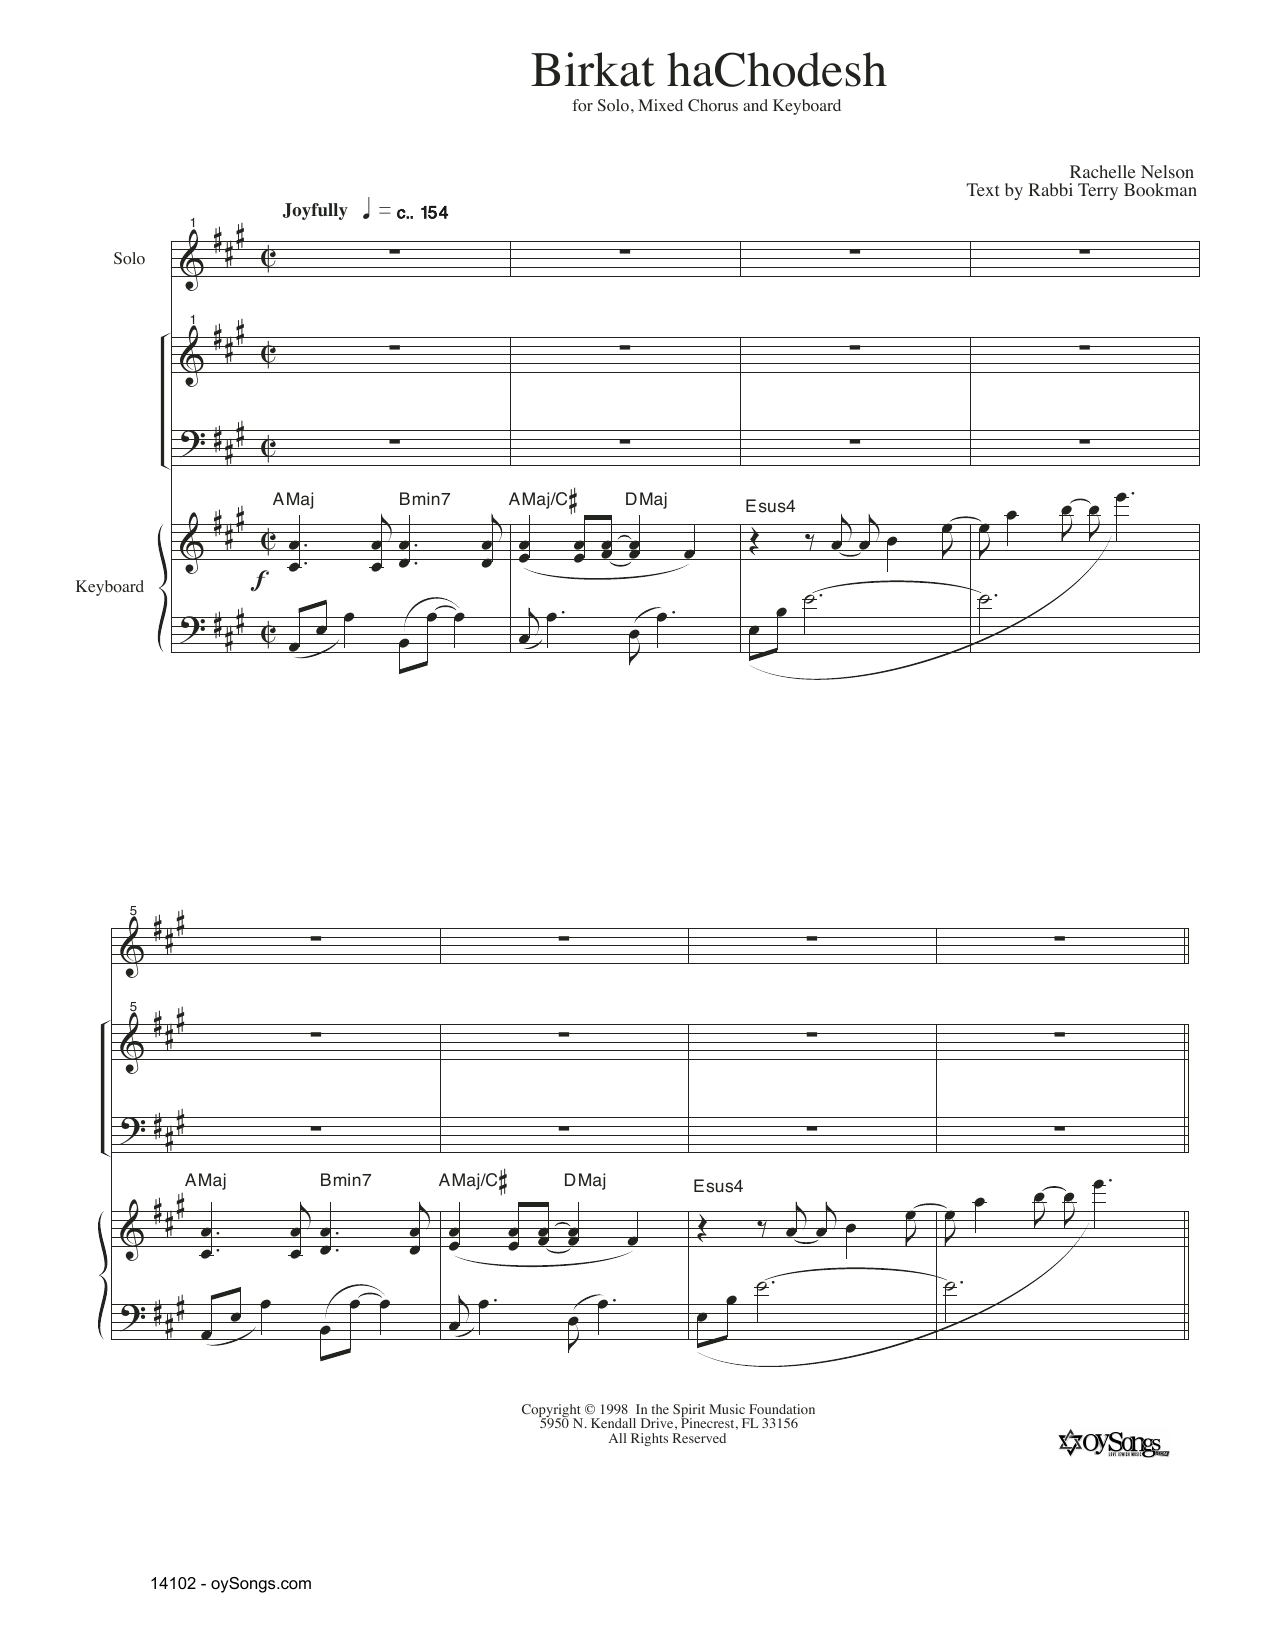 Rachelle Nelson Birkat haChodesh Sheet Music Notes & Chords for 2-Part Choir - Download or Print PDF